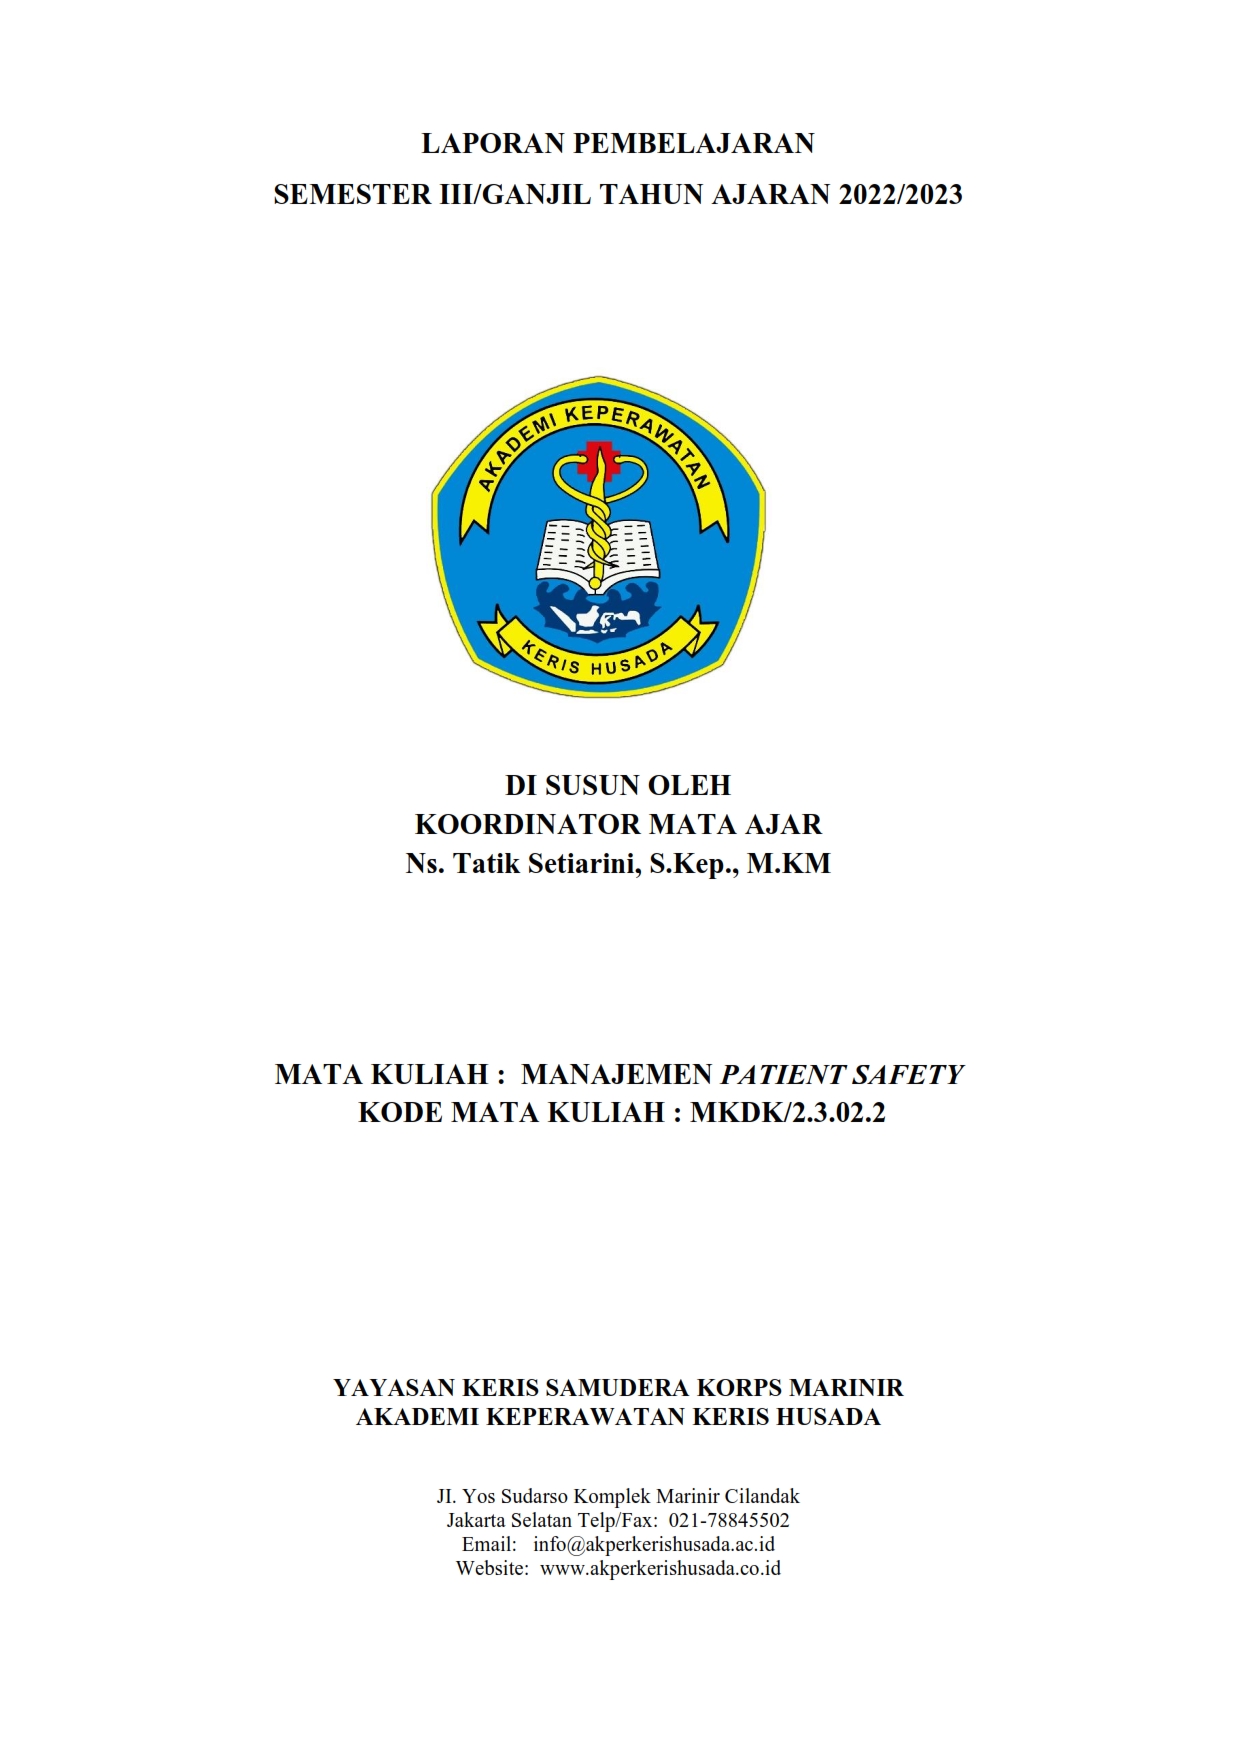 Jurnal Perkuliahan MK. Manajemen Patient Safety Semester Ganjil III TA.2022/2023